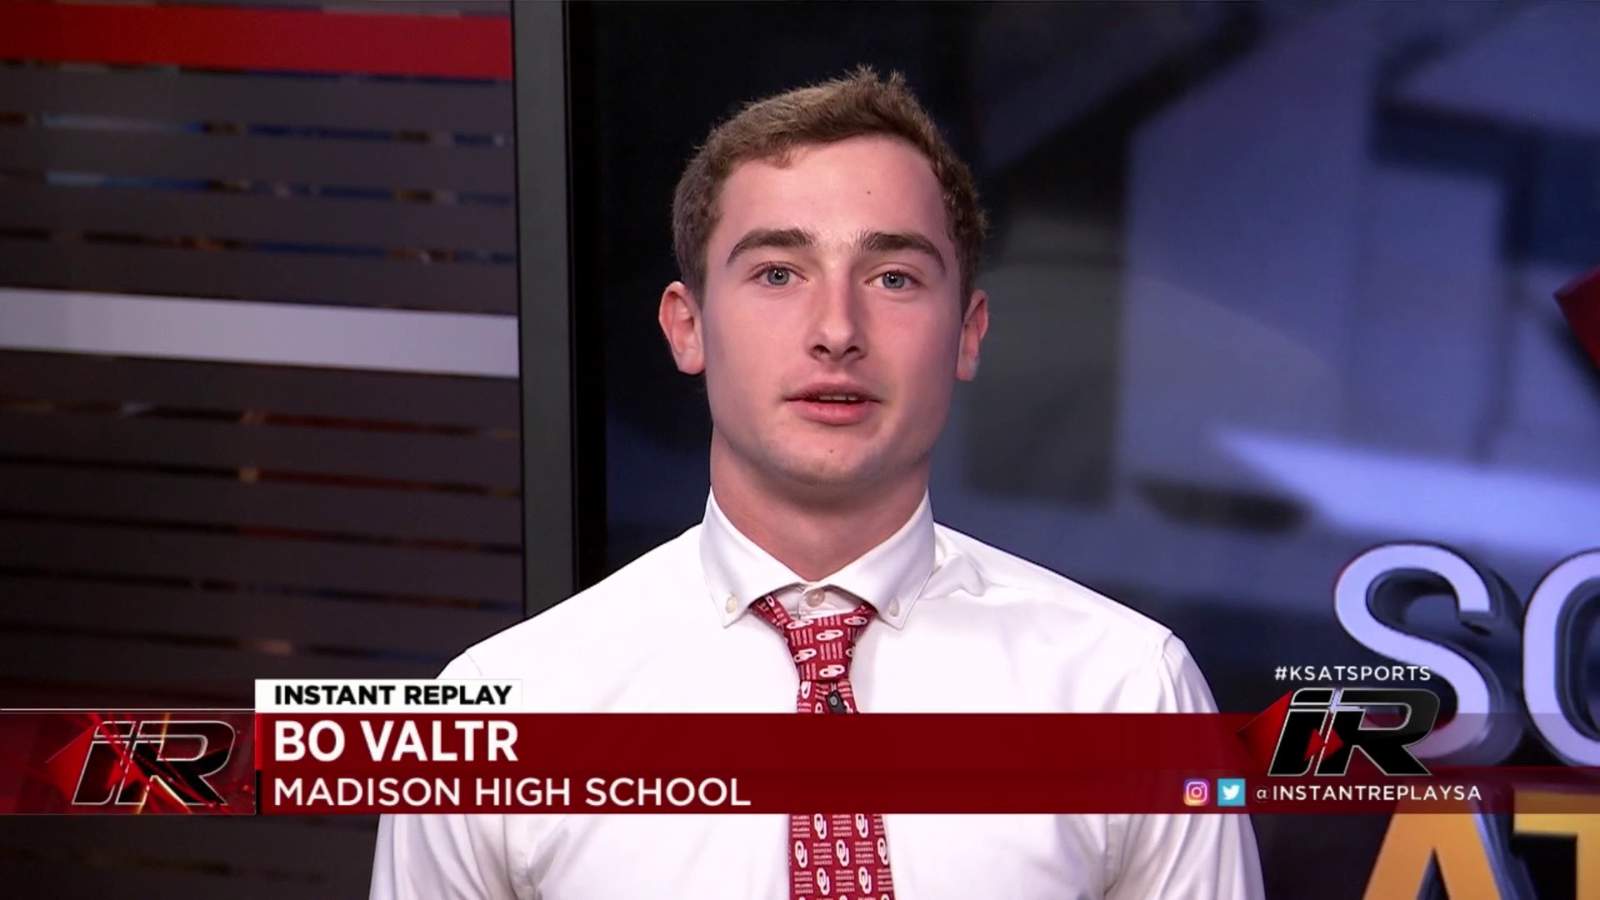 Scholar Athlete: Bo Valtr, Madison High School